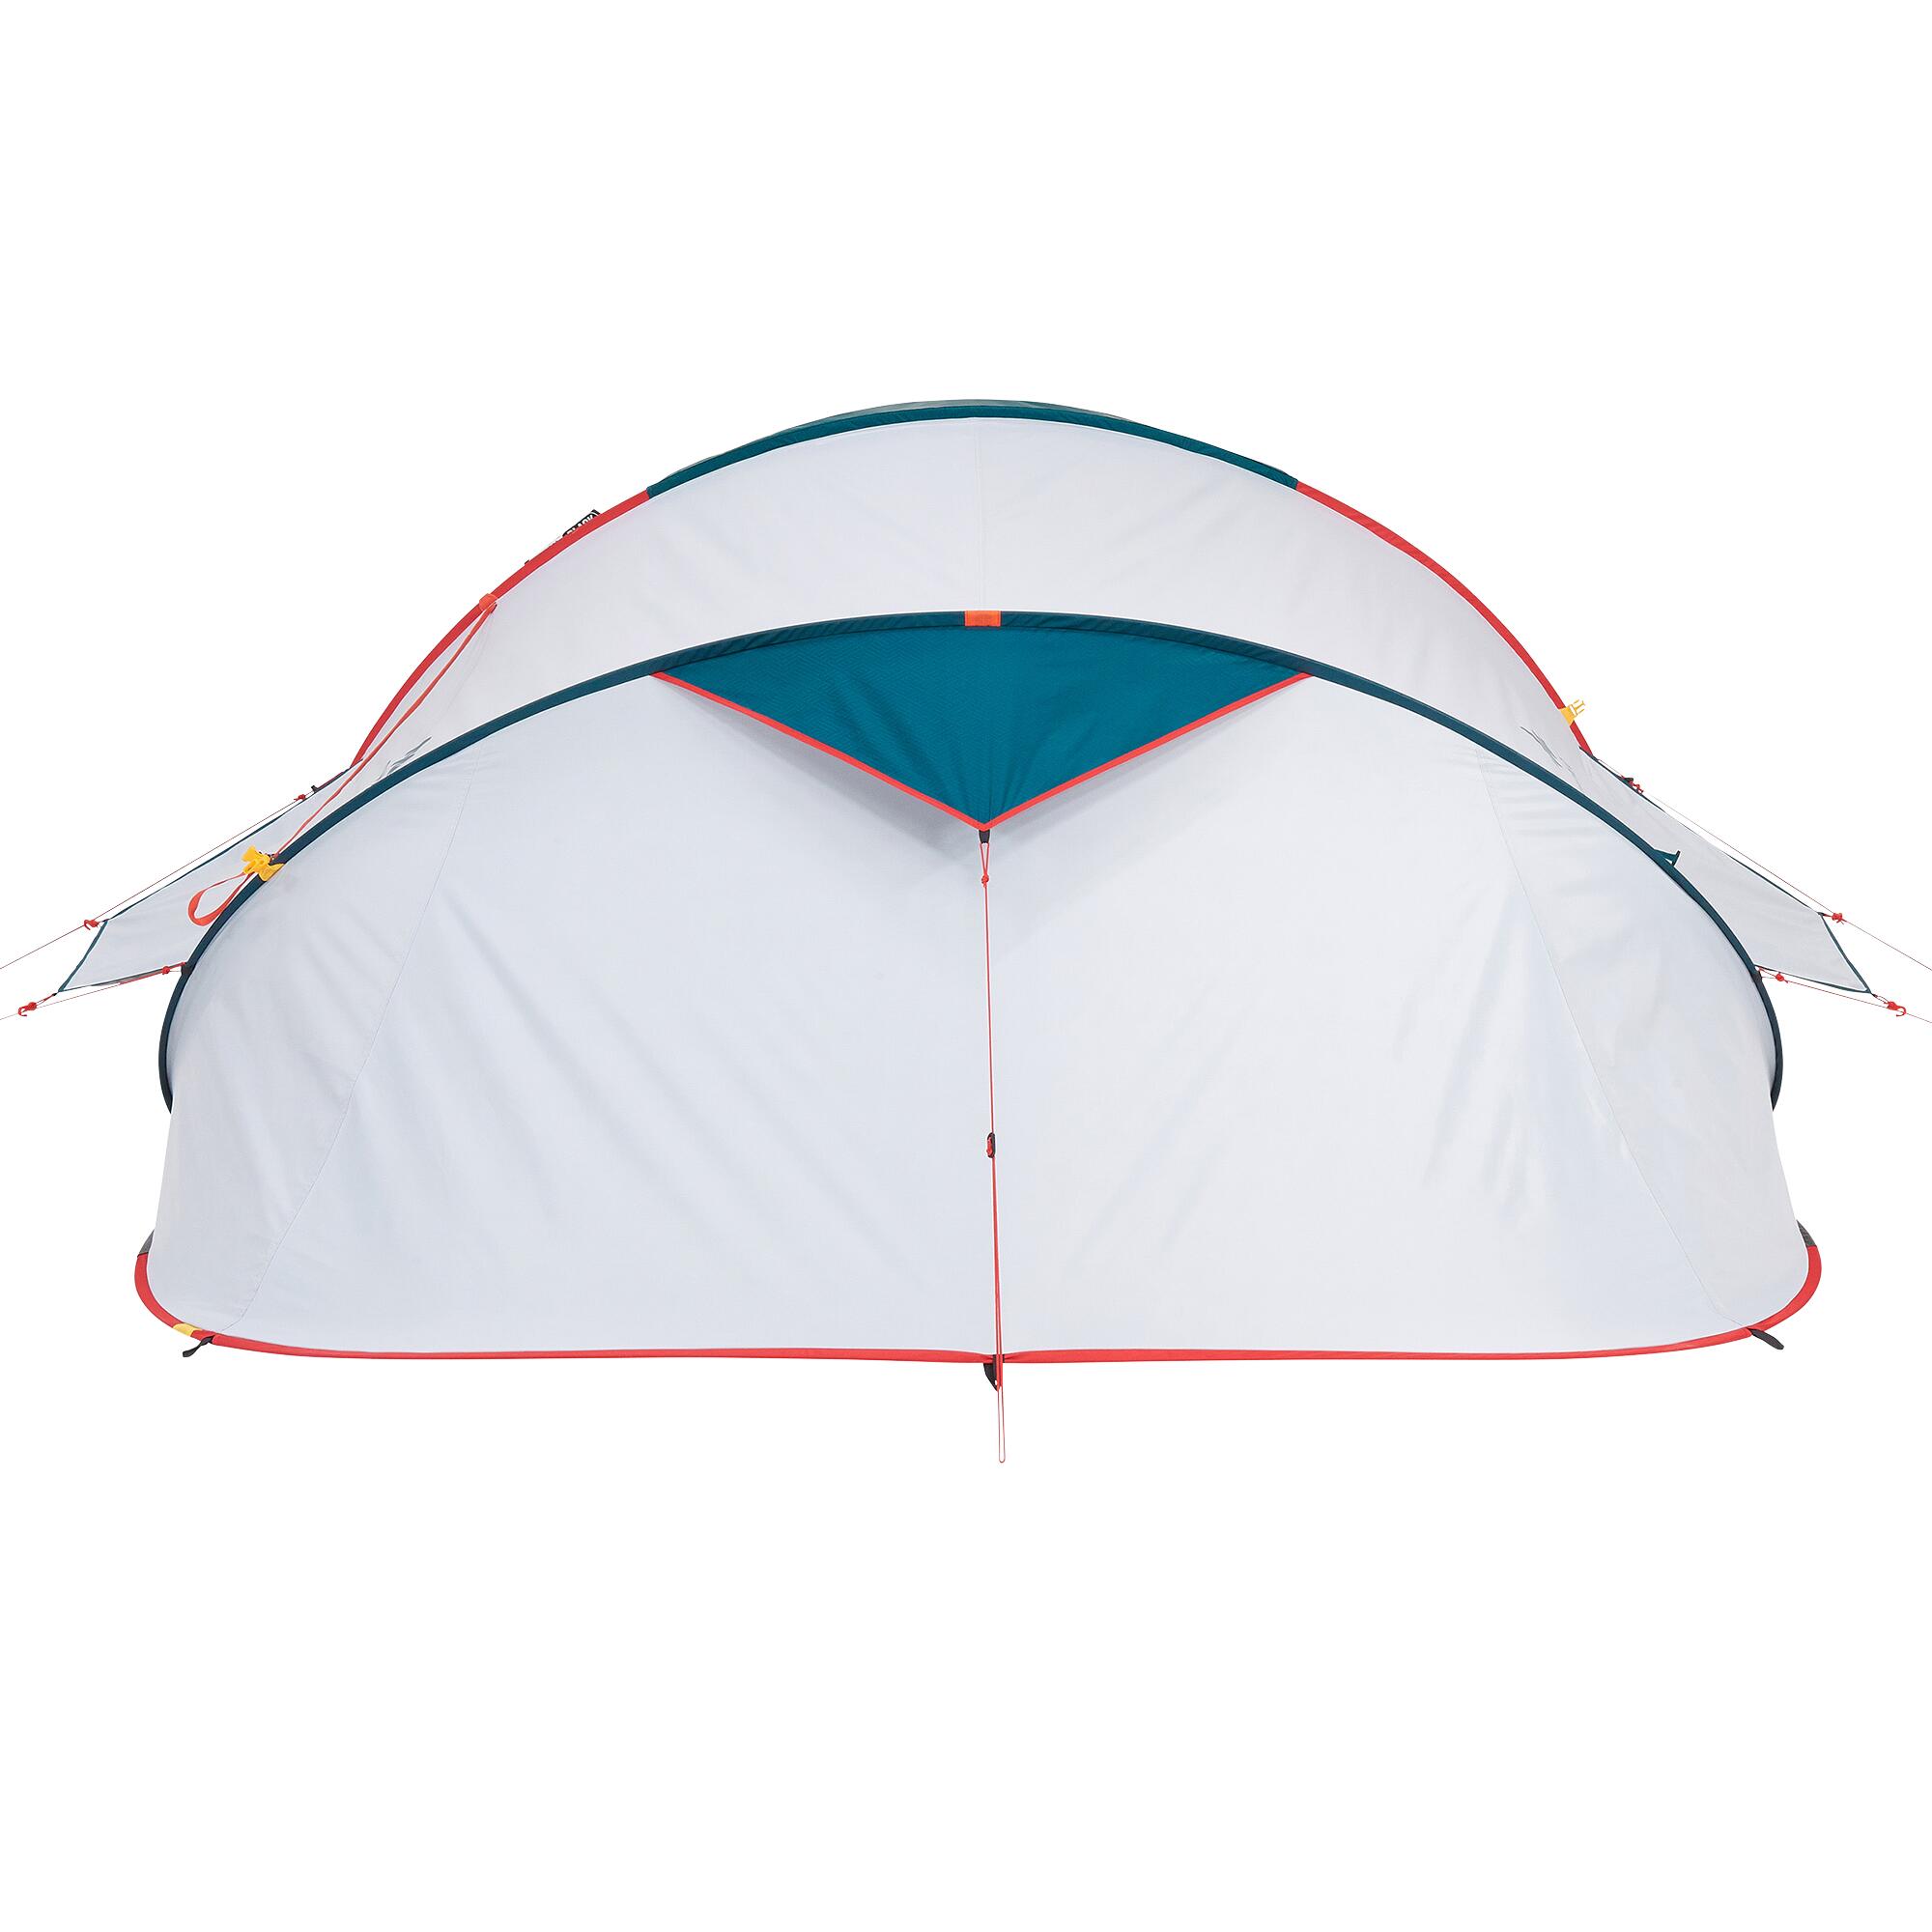 Camping tent - 2 SECONDS XL - 3-person - Fresh & Black 8/16